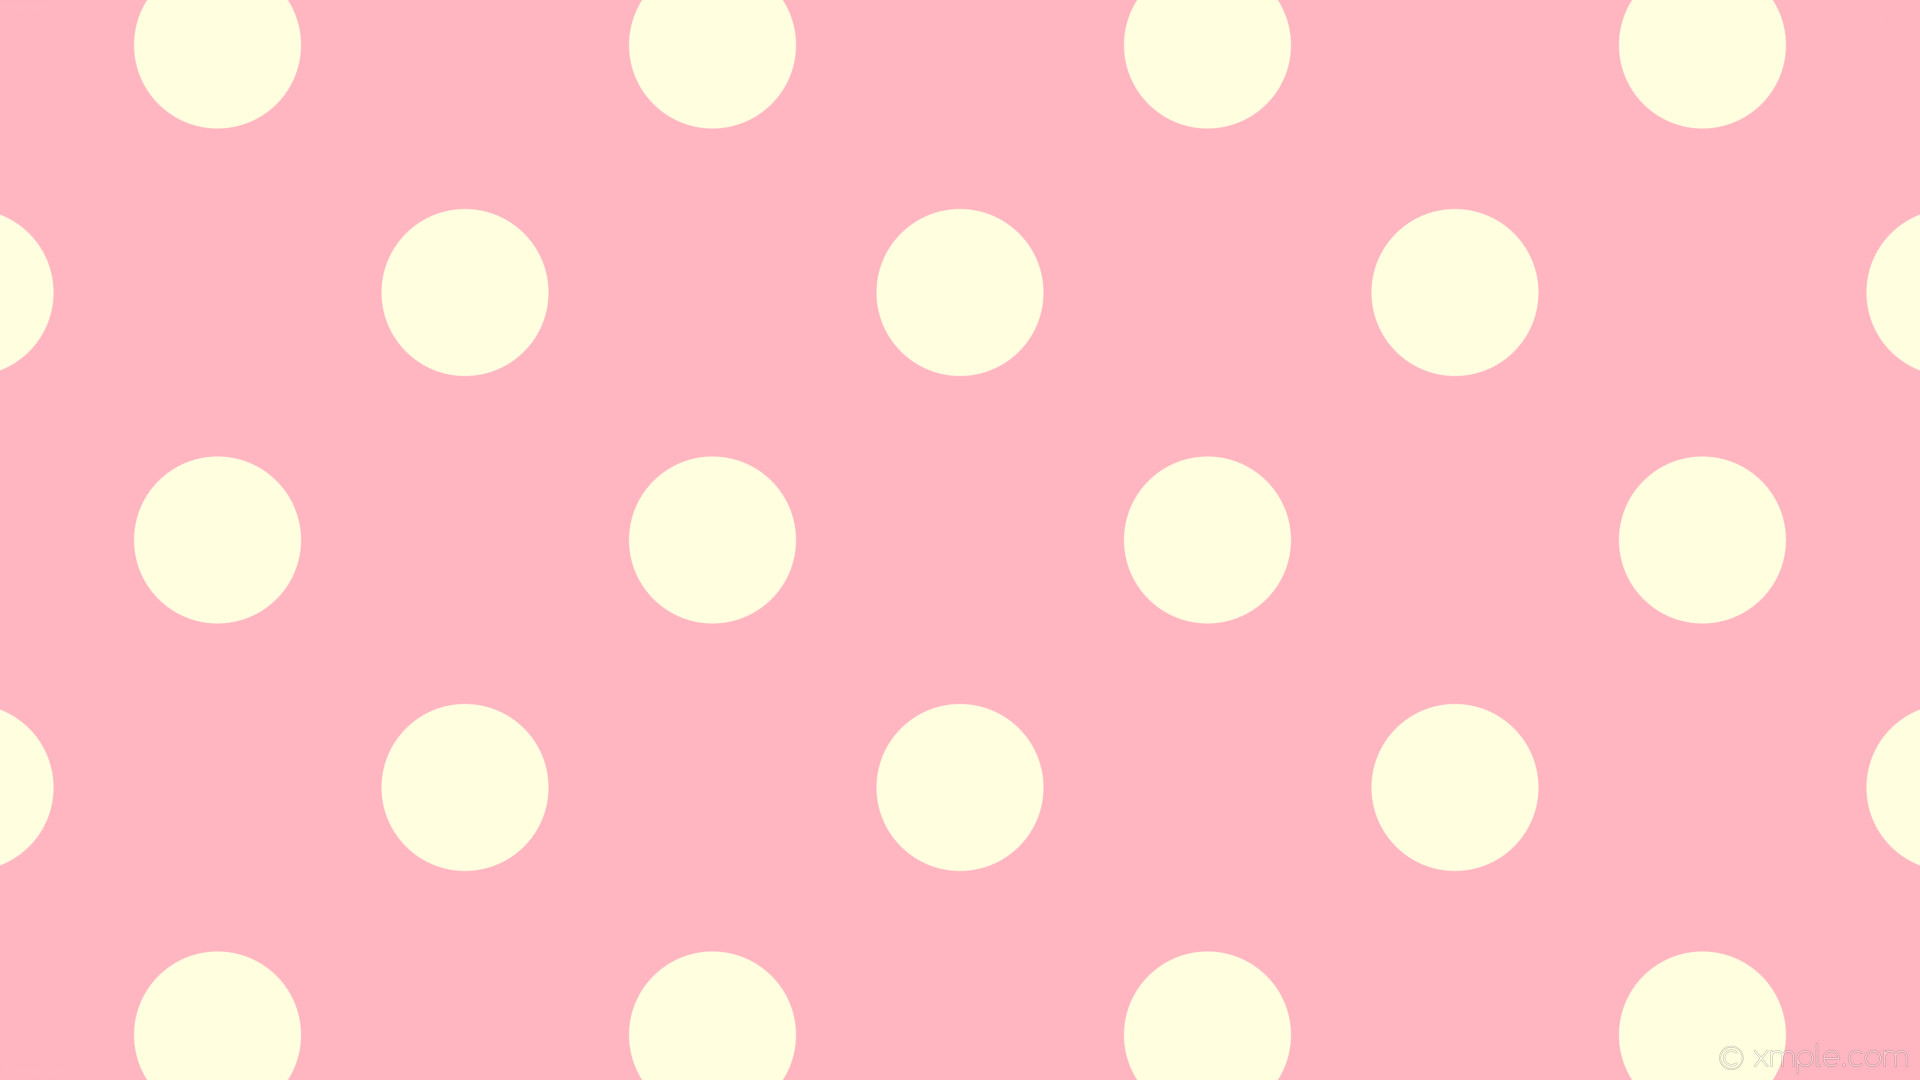 1920x1080 wallpaper dots polka pink spots yellow light pink light yellow #ffb6c1  #ffffe0 45Â°